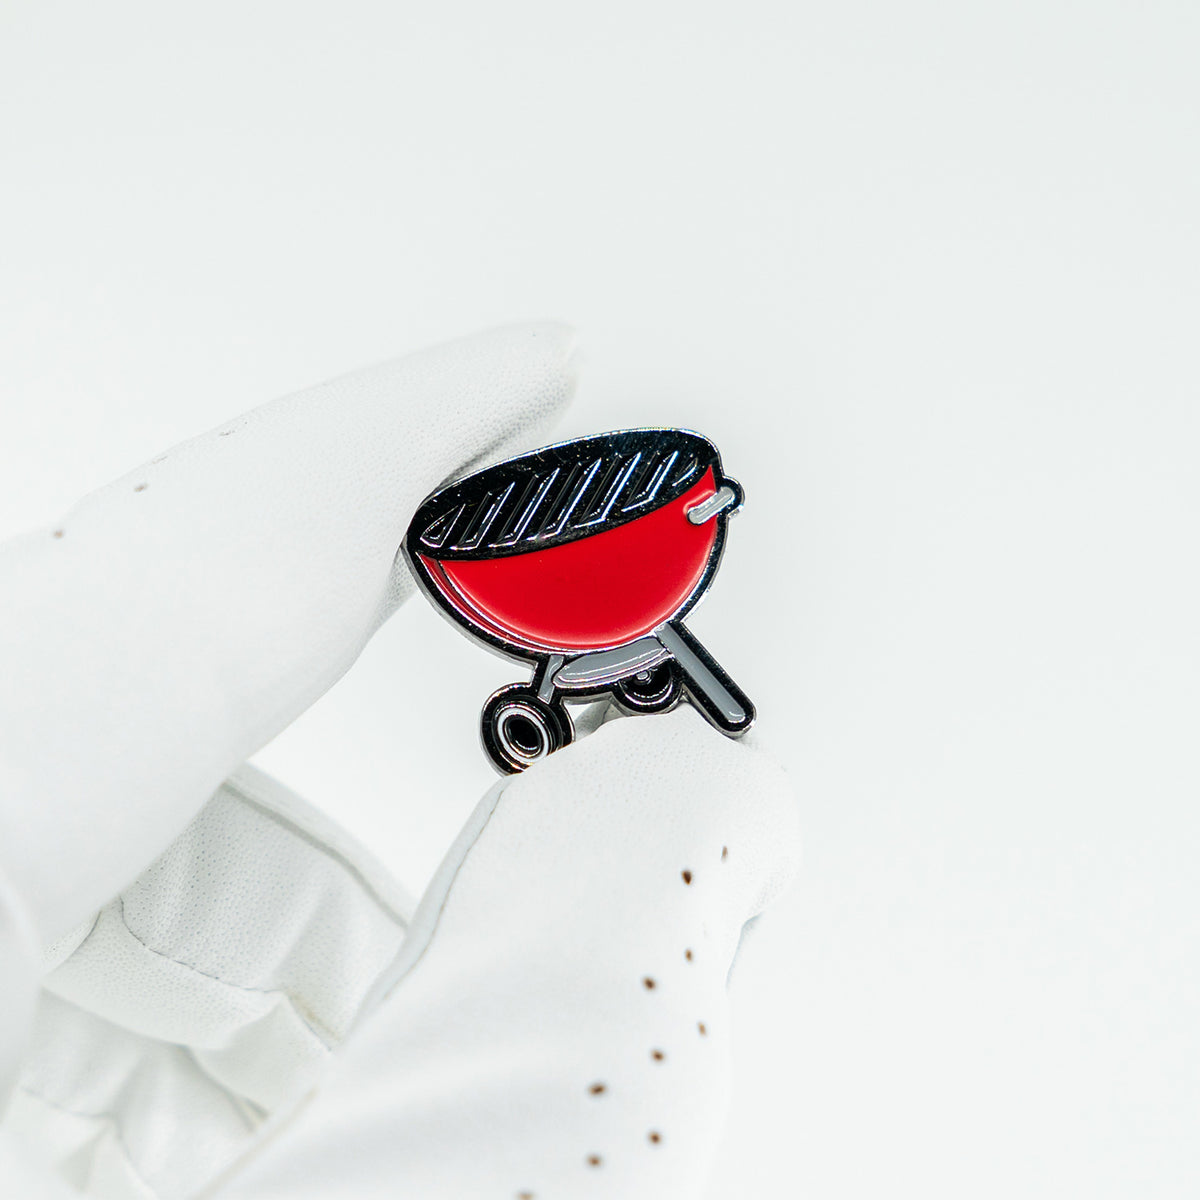 bbq grill weber red golf ball marker matchstick in white golf glove